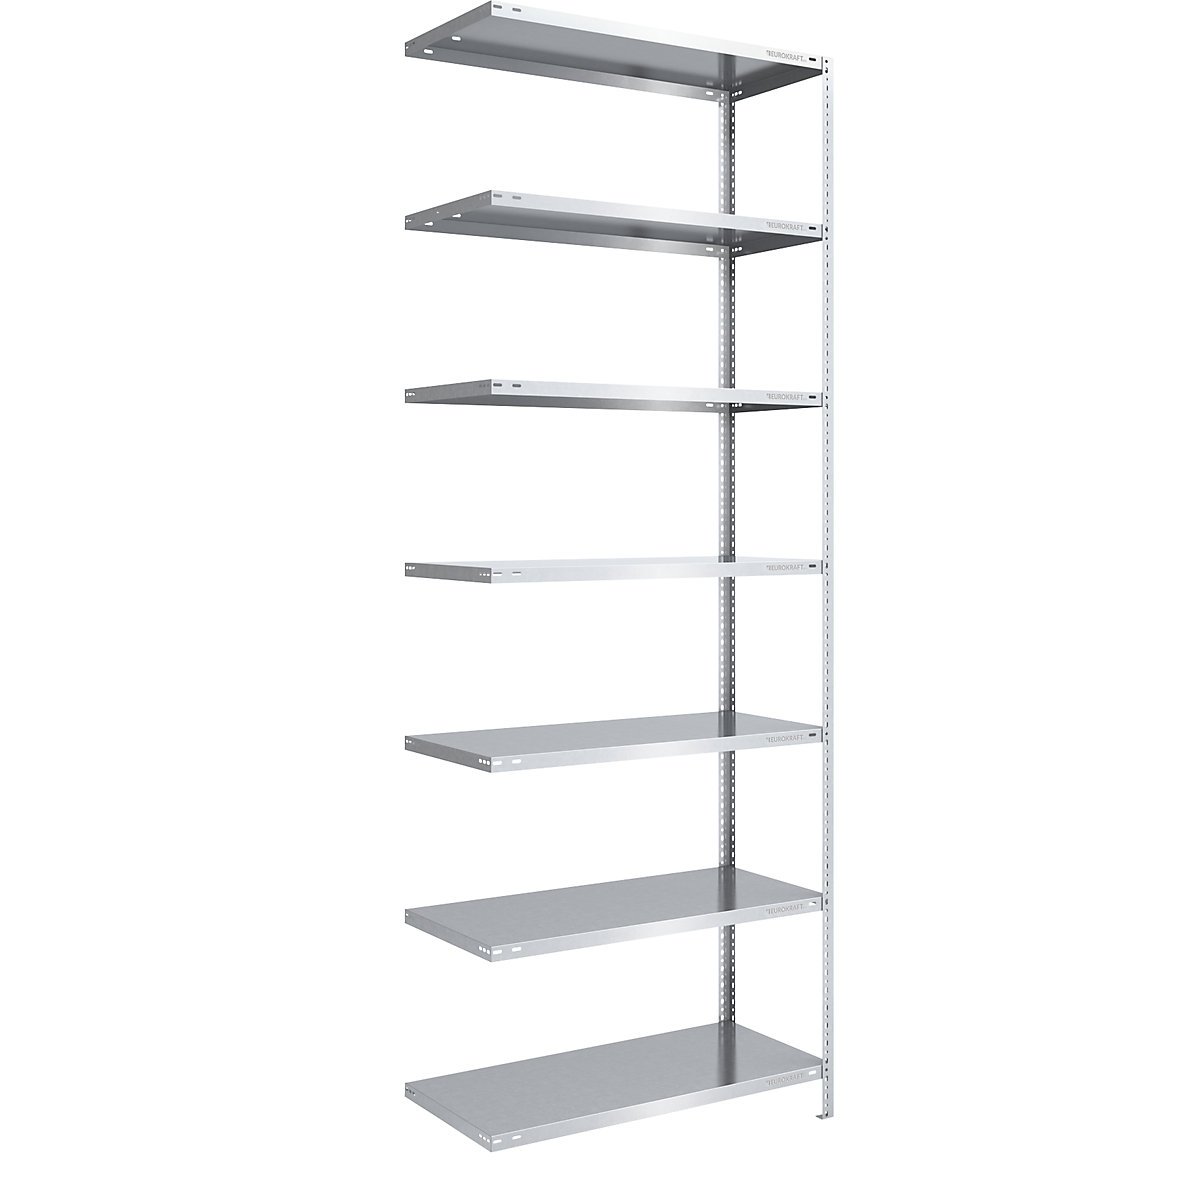 Bolt-together storage shelving, zinc plated, medium duty – eurokraft pro, shelf unit height 3000 mm, shelf width 1000 mm, depth 600 mm, extension shelf unit-8